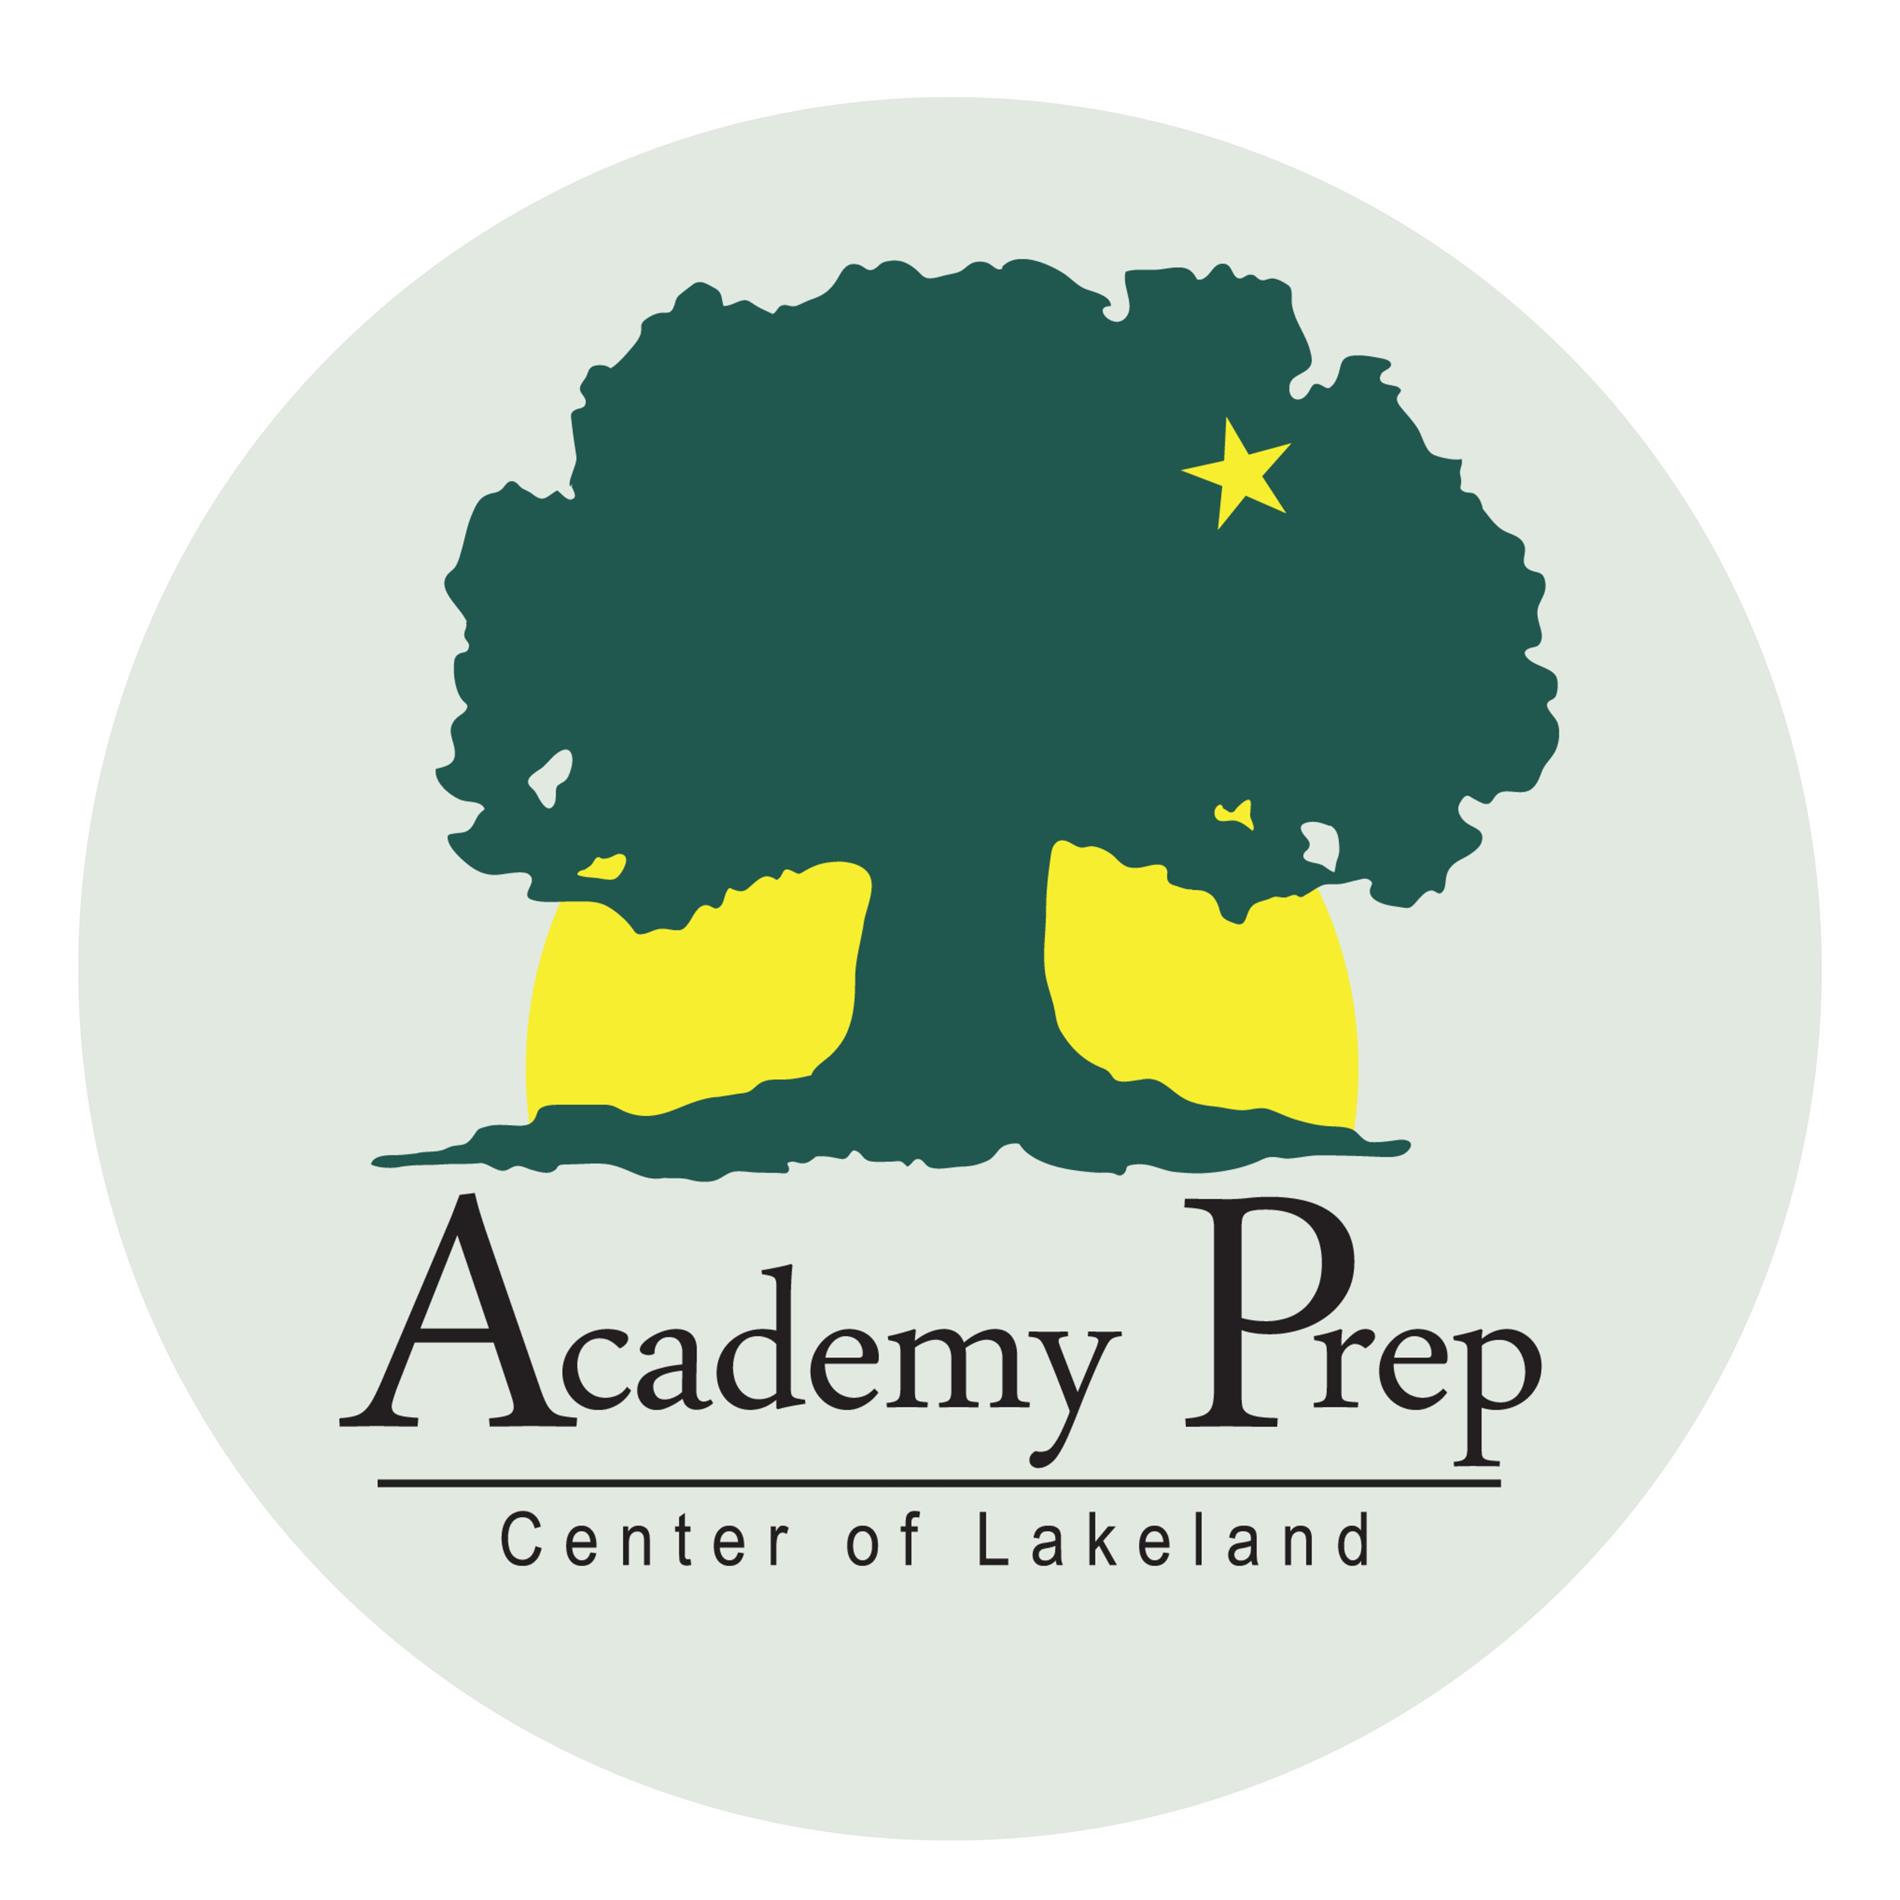 Academy Prep Center of Lakeland